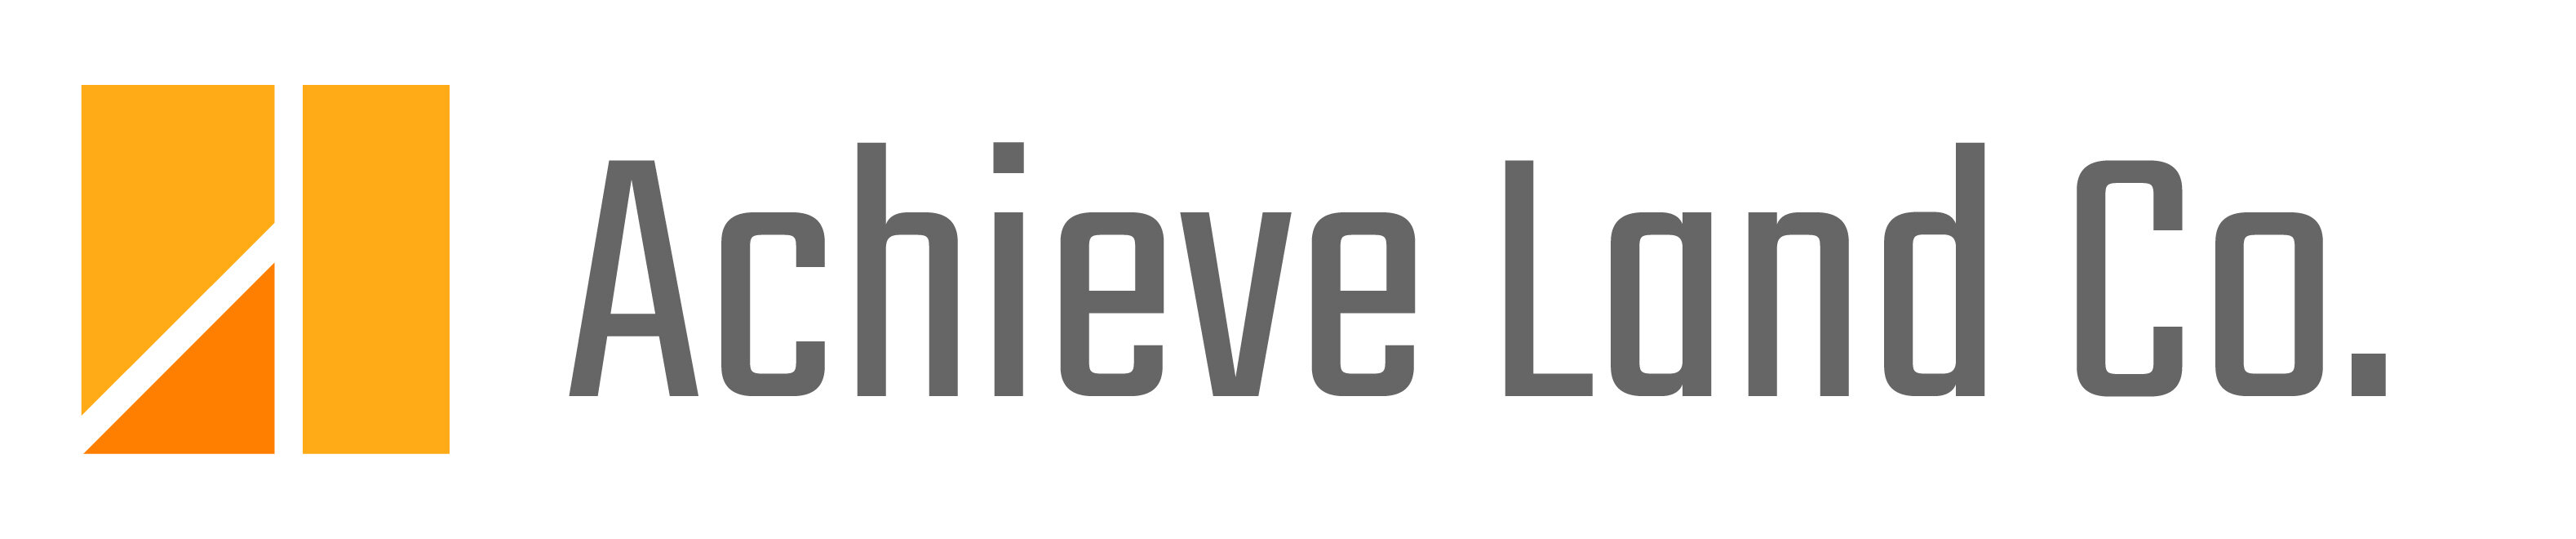 Achieve Land Co. logo